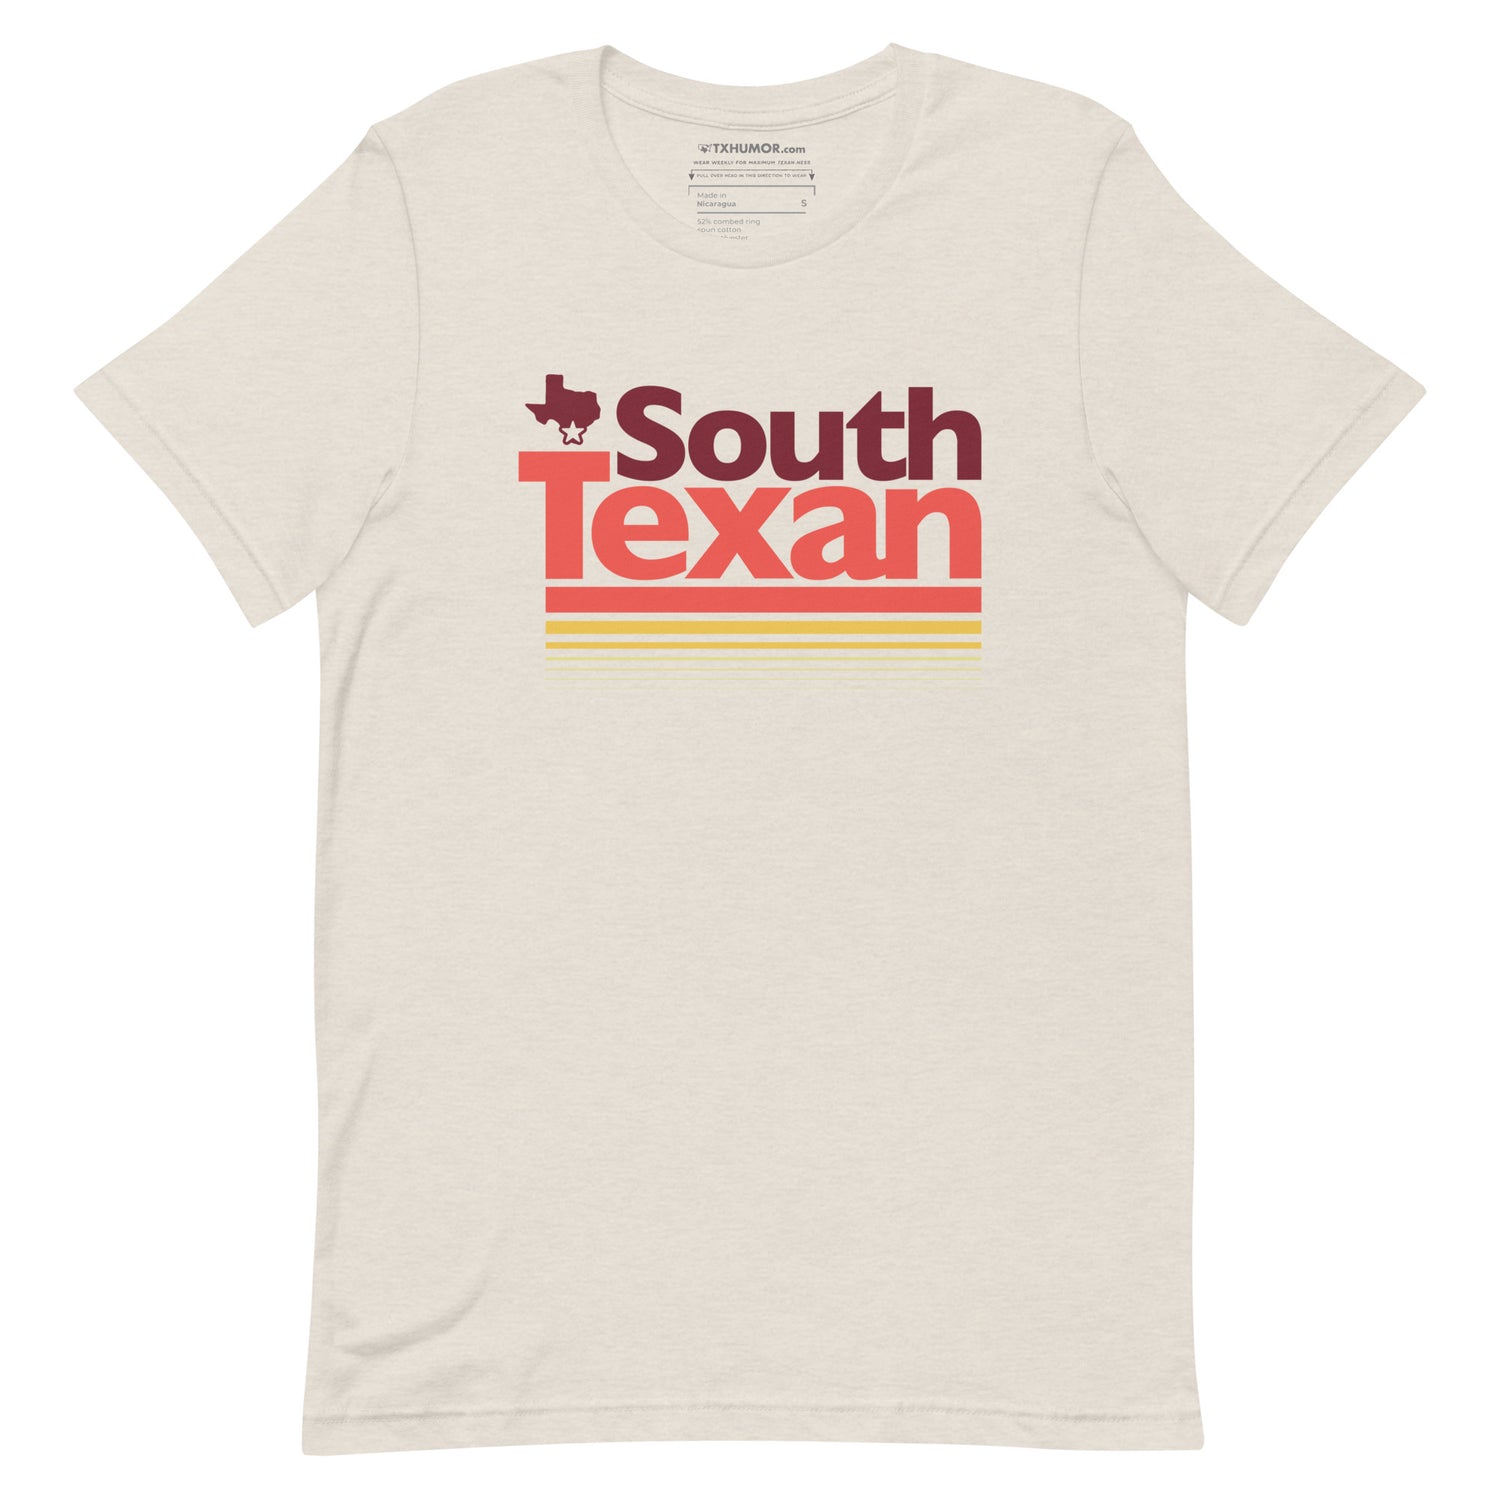 South Texan T-shirt